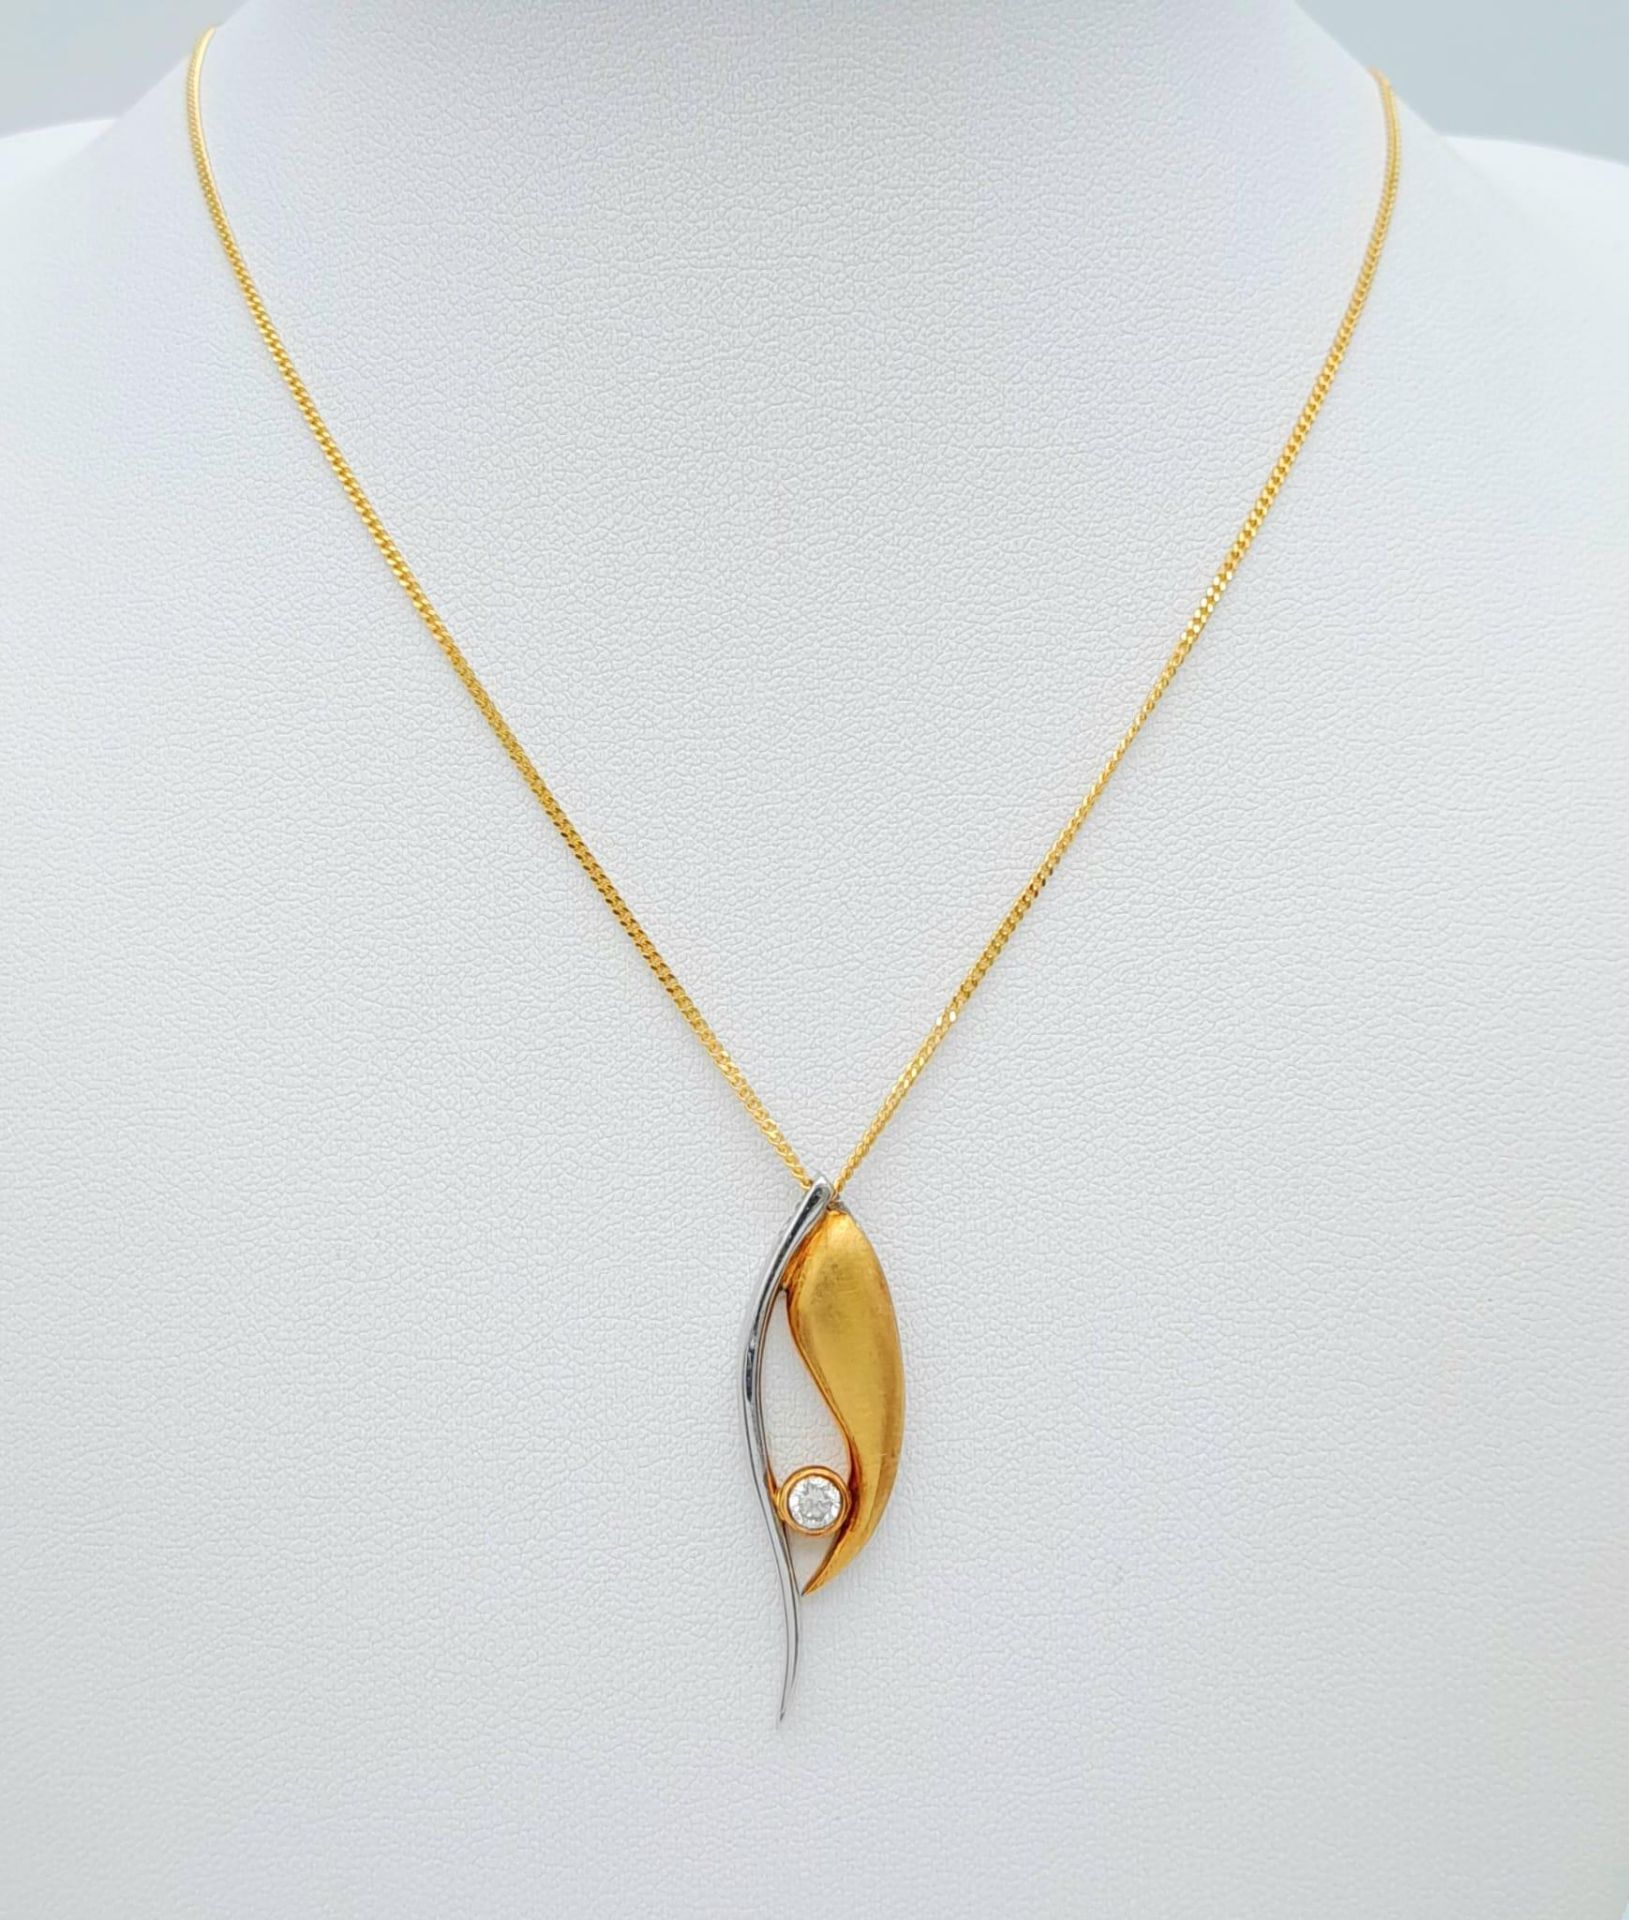 An 18K Bi Colour Gold Diamond Pendant on an 18K Yellow Gold Disappearing Necklace. 0.15ct diamond.